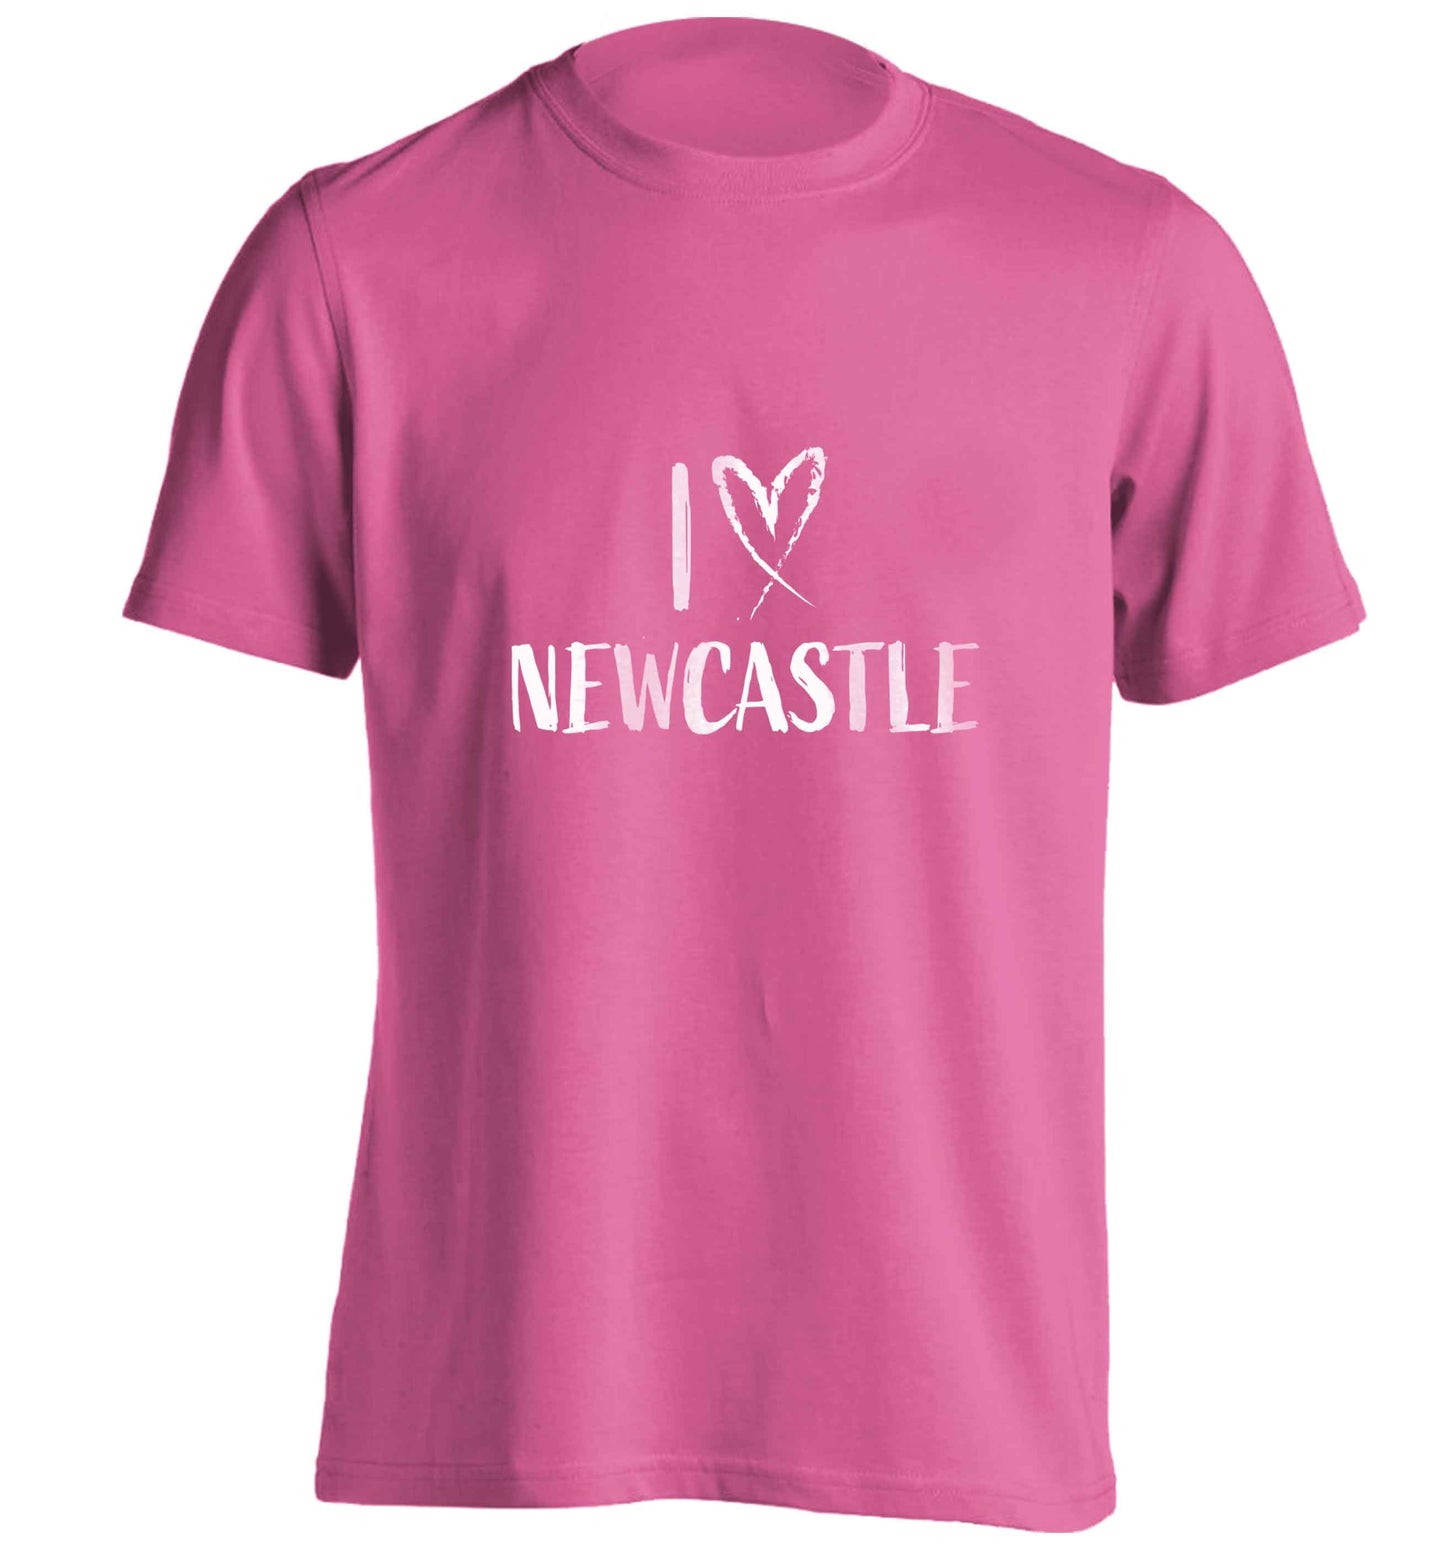 I love Newcastle adults unisex pink Tshirt 2XL